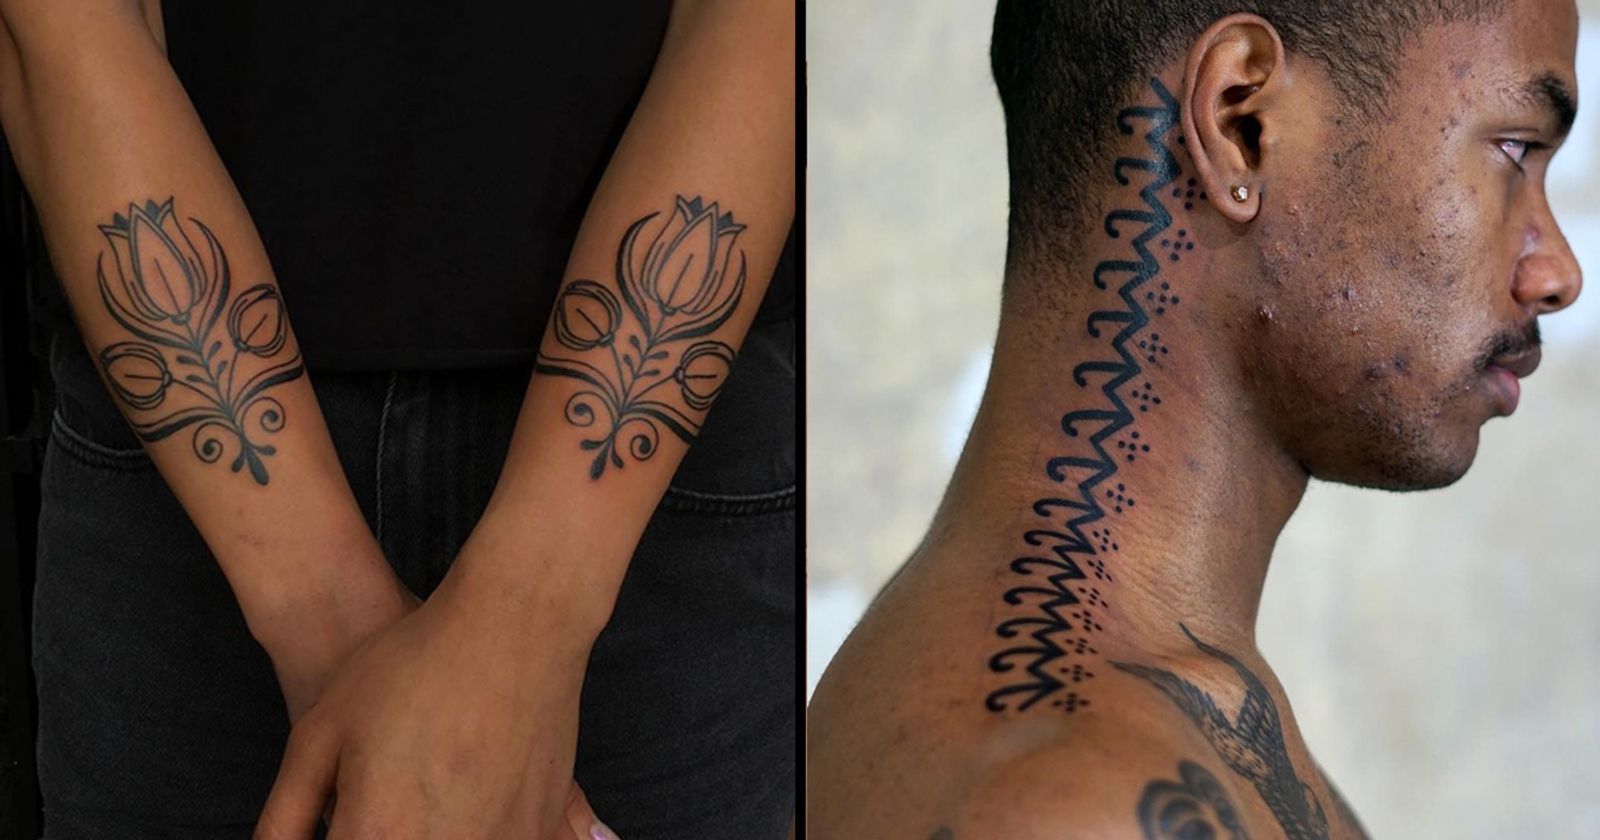 2. "Tattoo Designs for Mature Skin" - wide 10